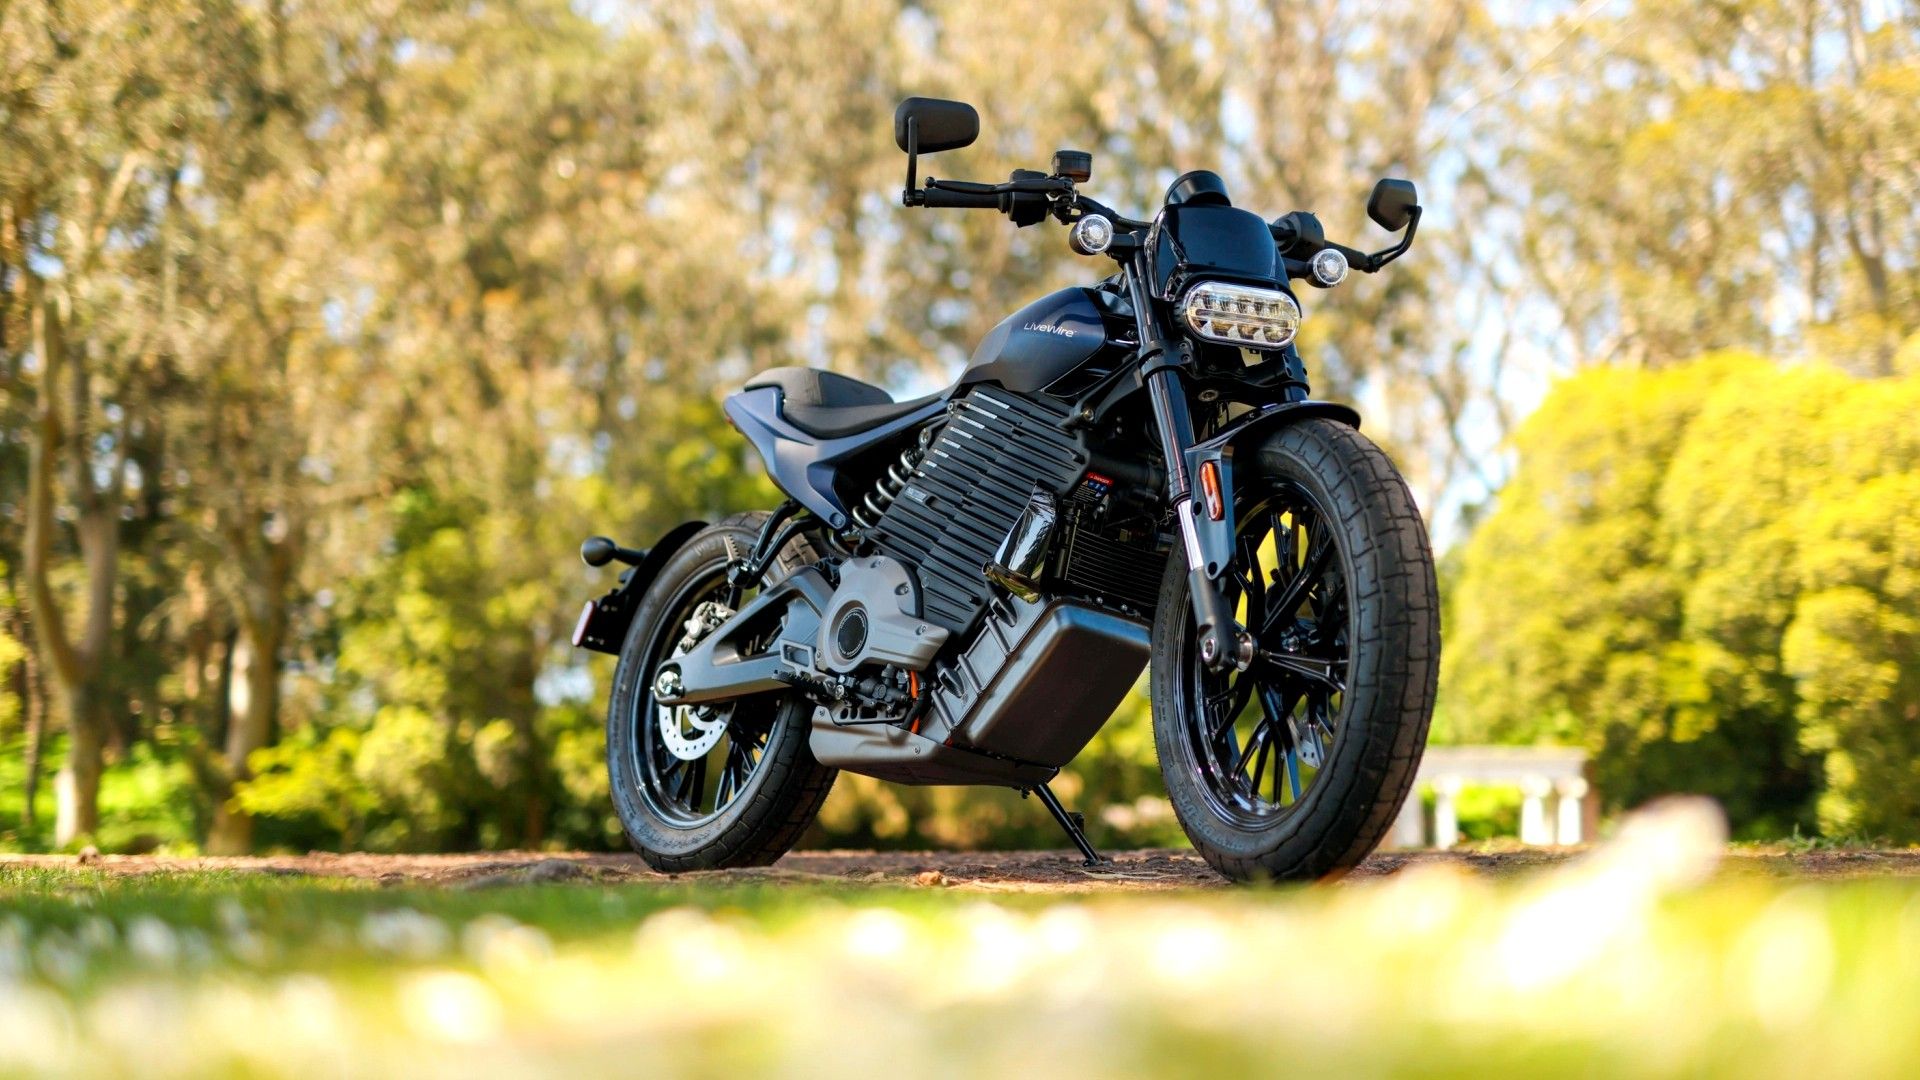 2020 Harley-Davidson LiveWire Buyer's Guide: Specs, Photos, Price